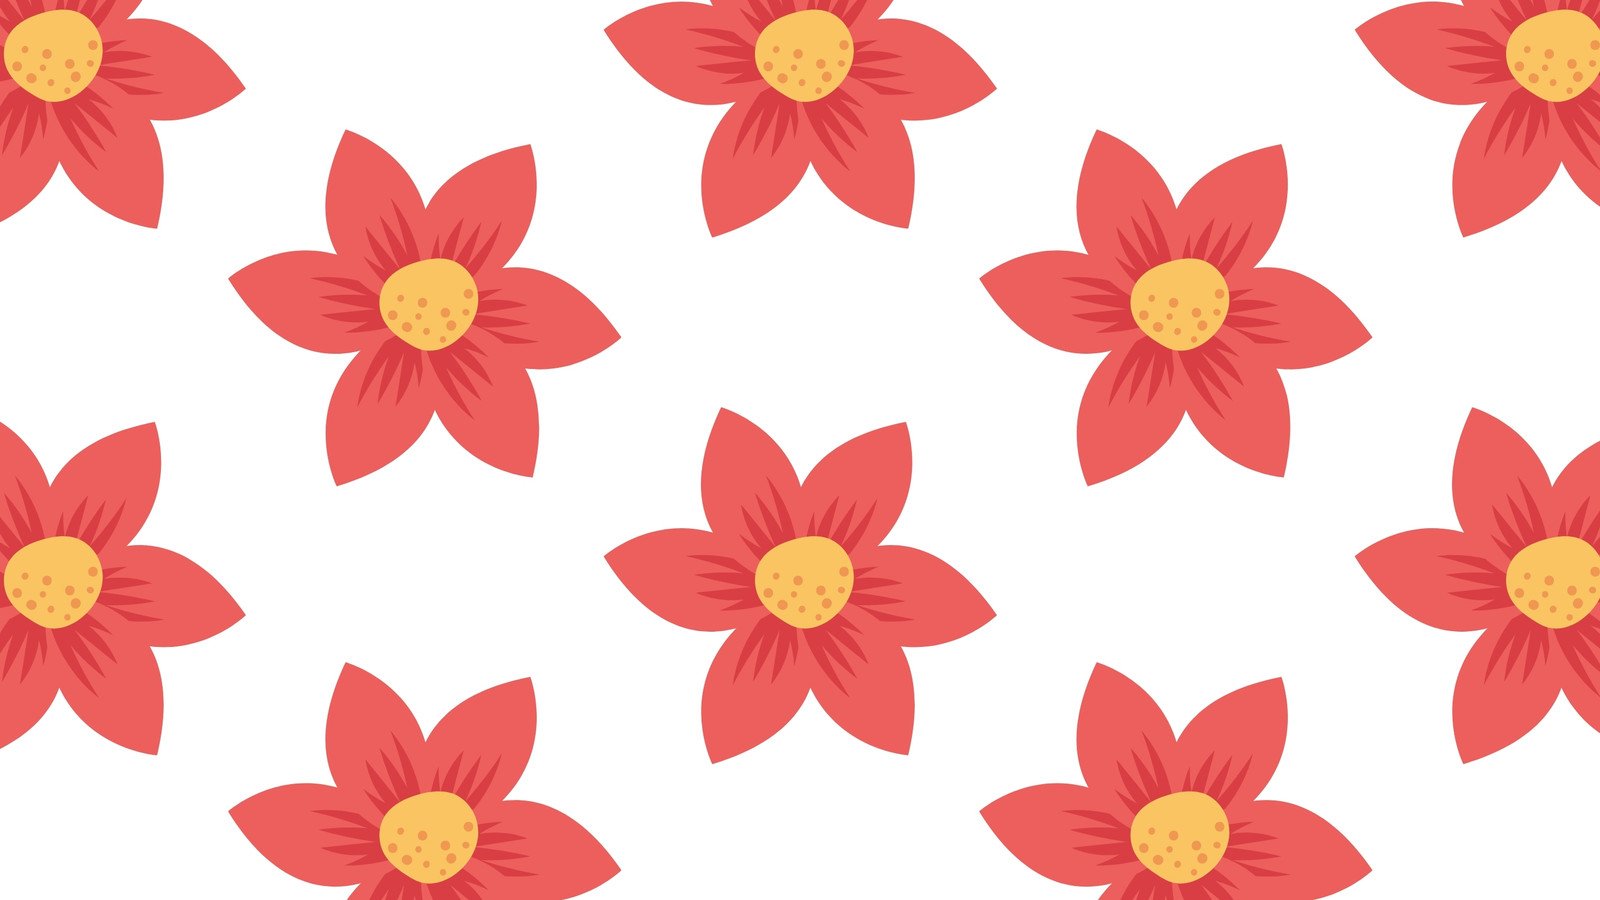 red flower desktop wallpaper